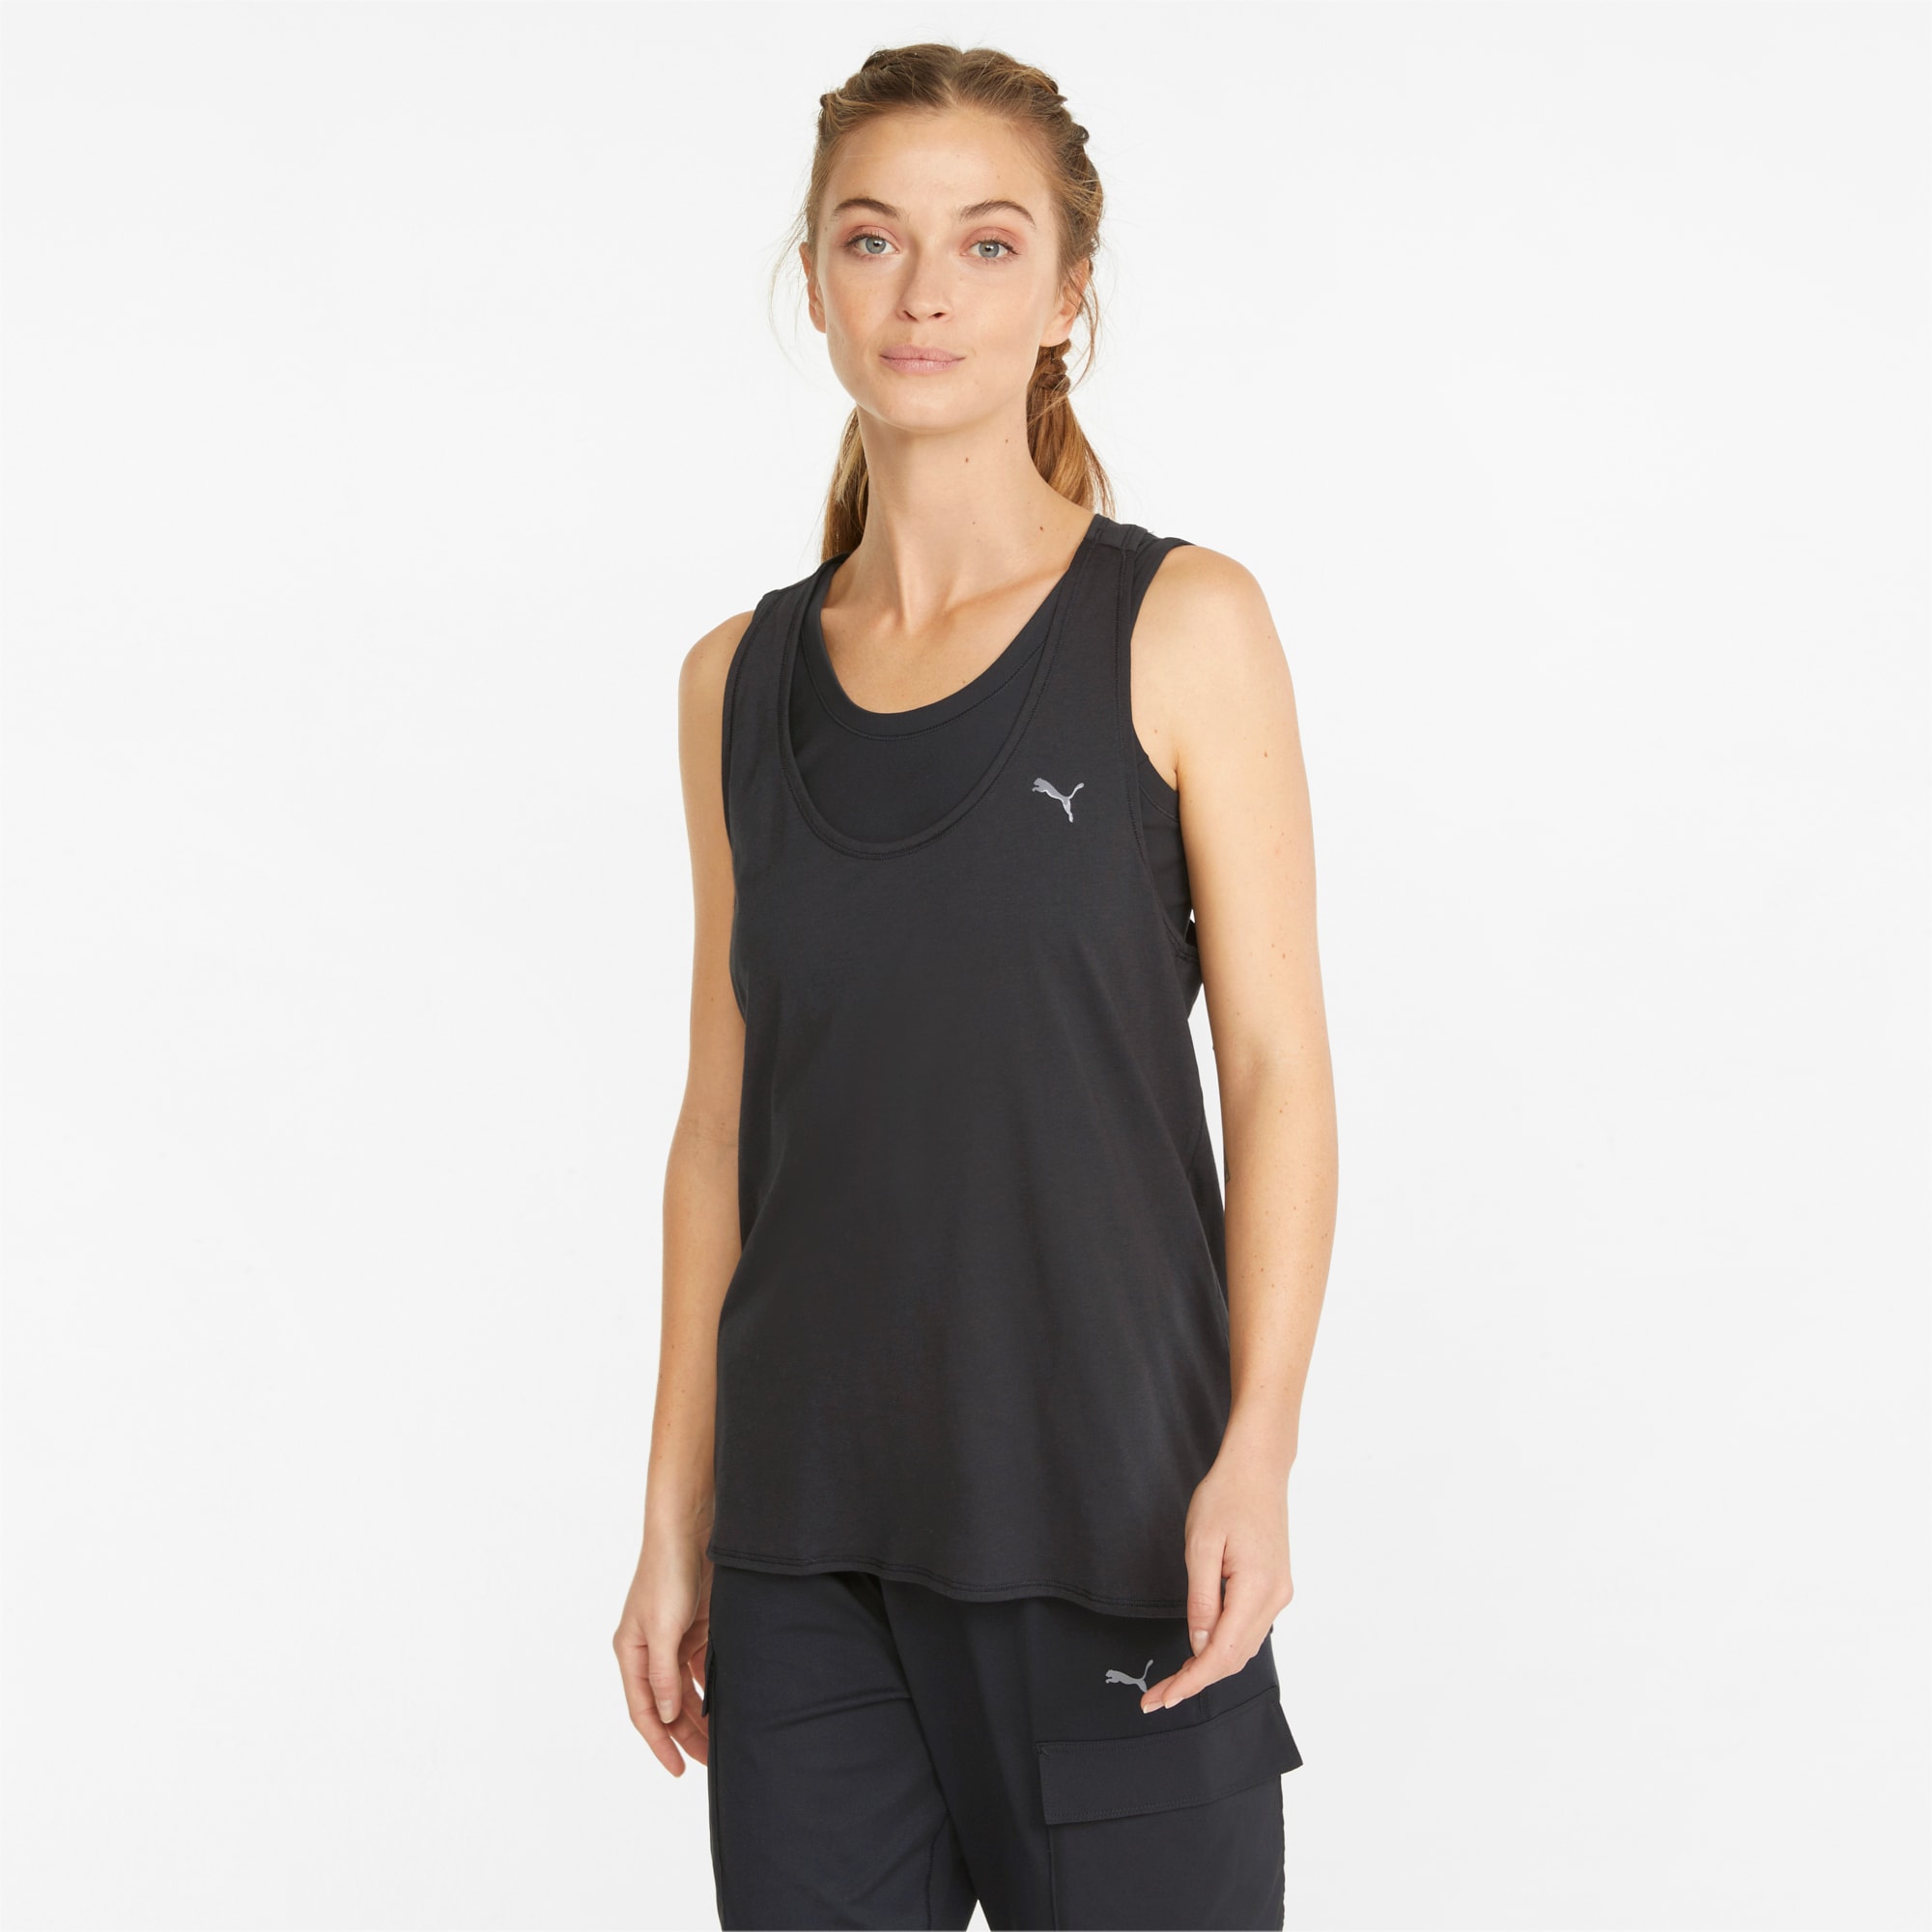 PUMA Studio Foundation Relax Women's Training Tank Top Shirt, Black, Size XL, Clothing